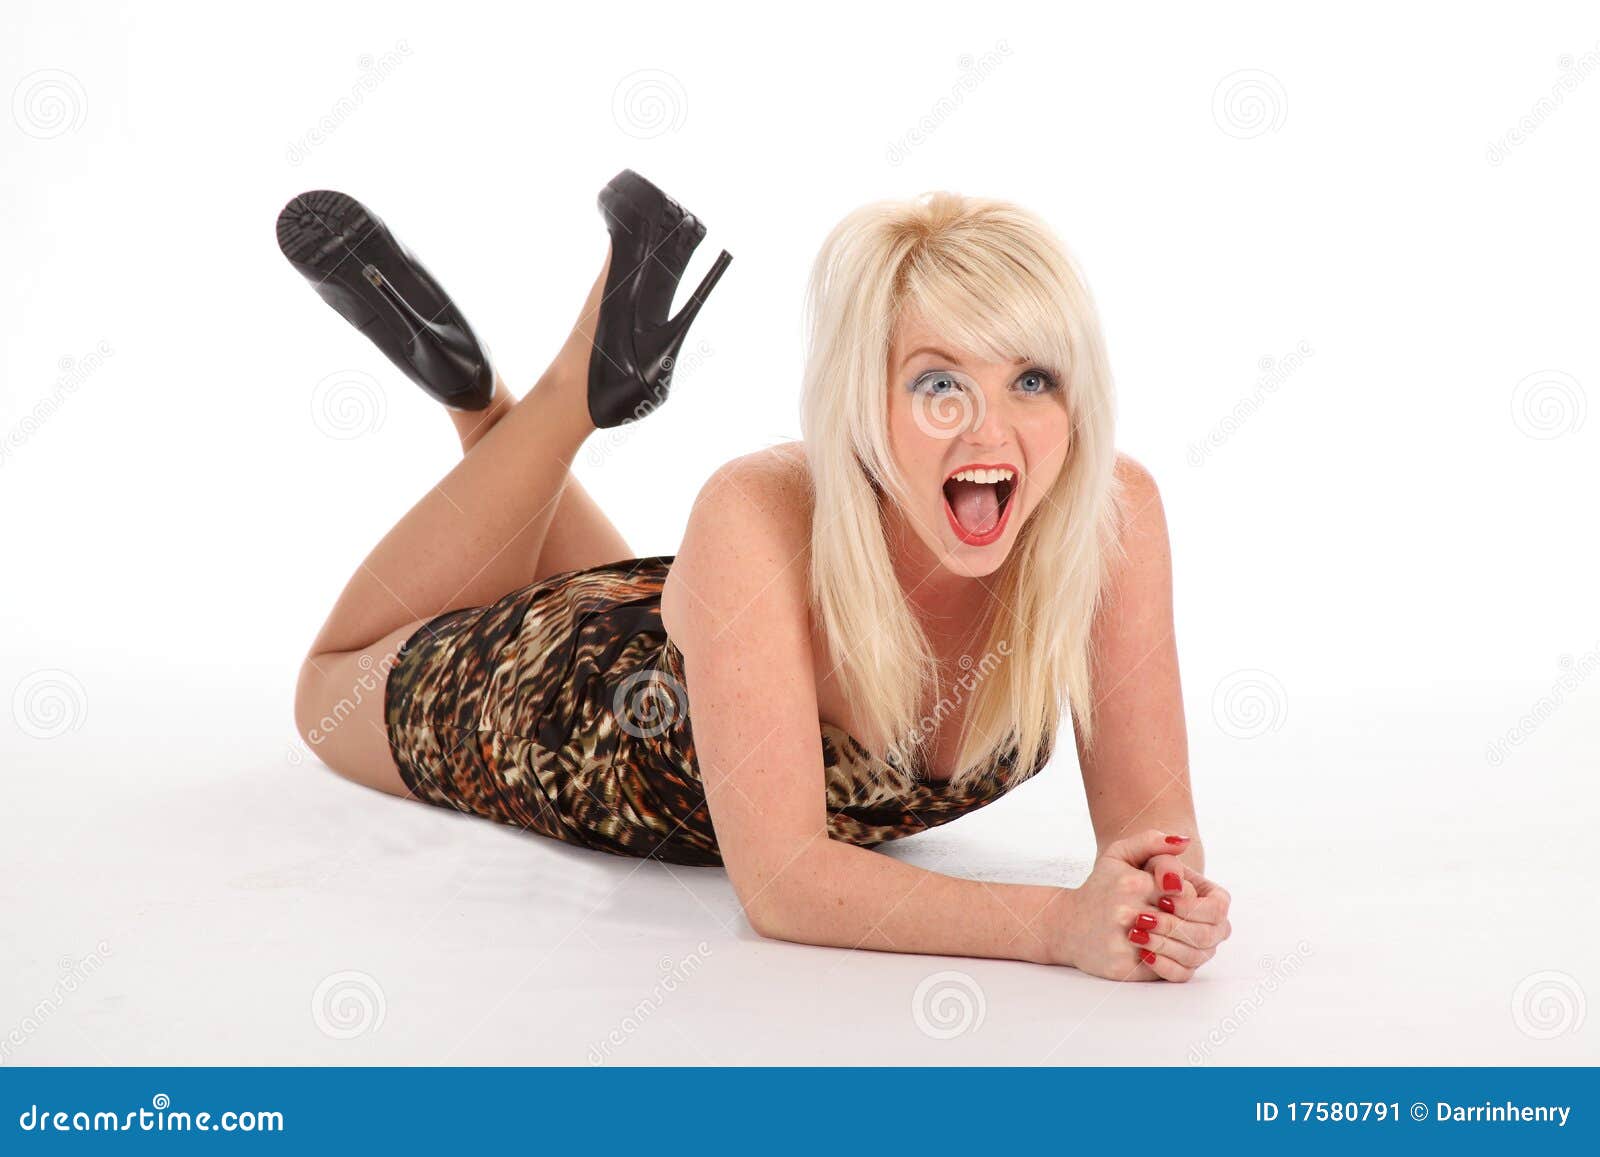 blonde woman lying on floor laughing